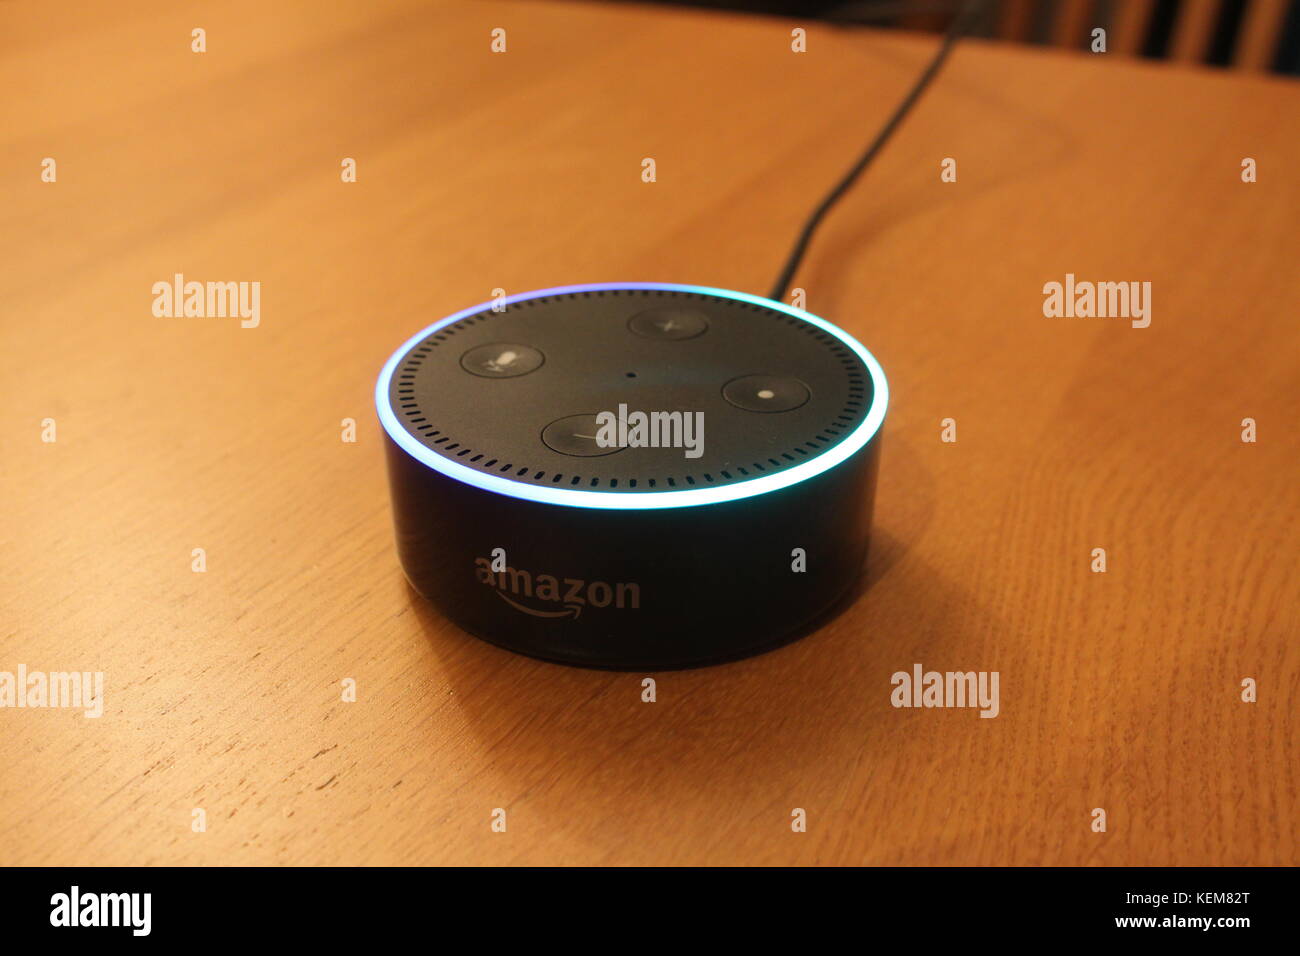 Alexa Echo Dot by Amazon Stock Photo